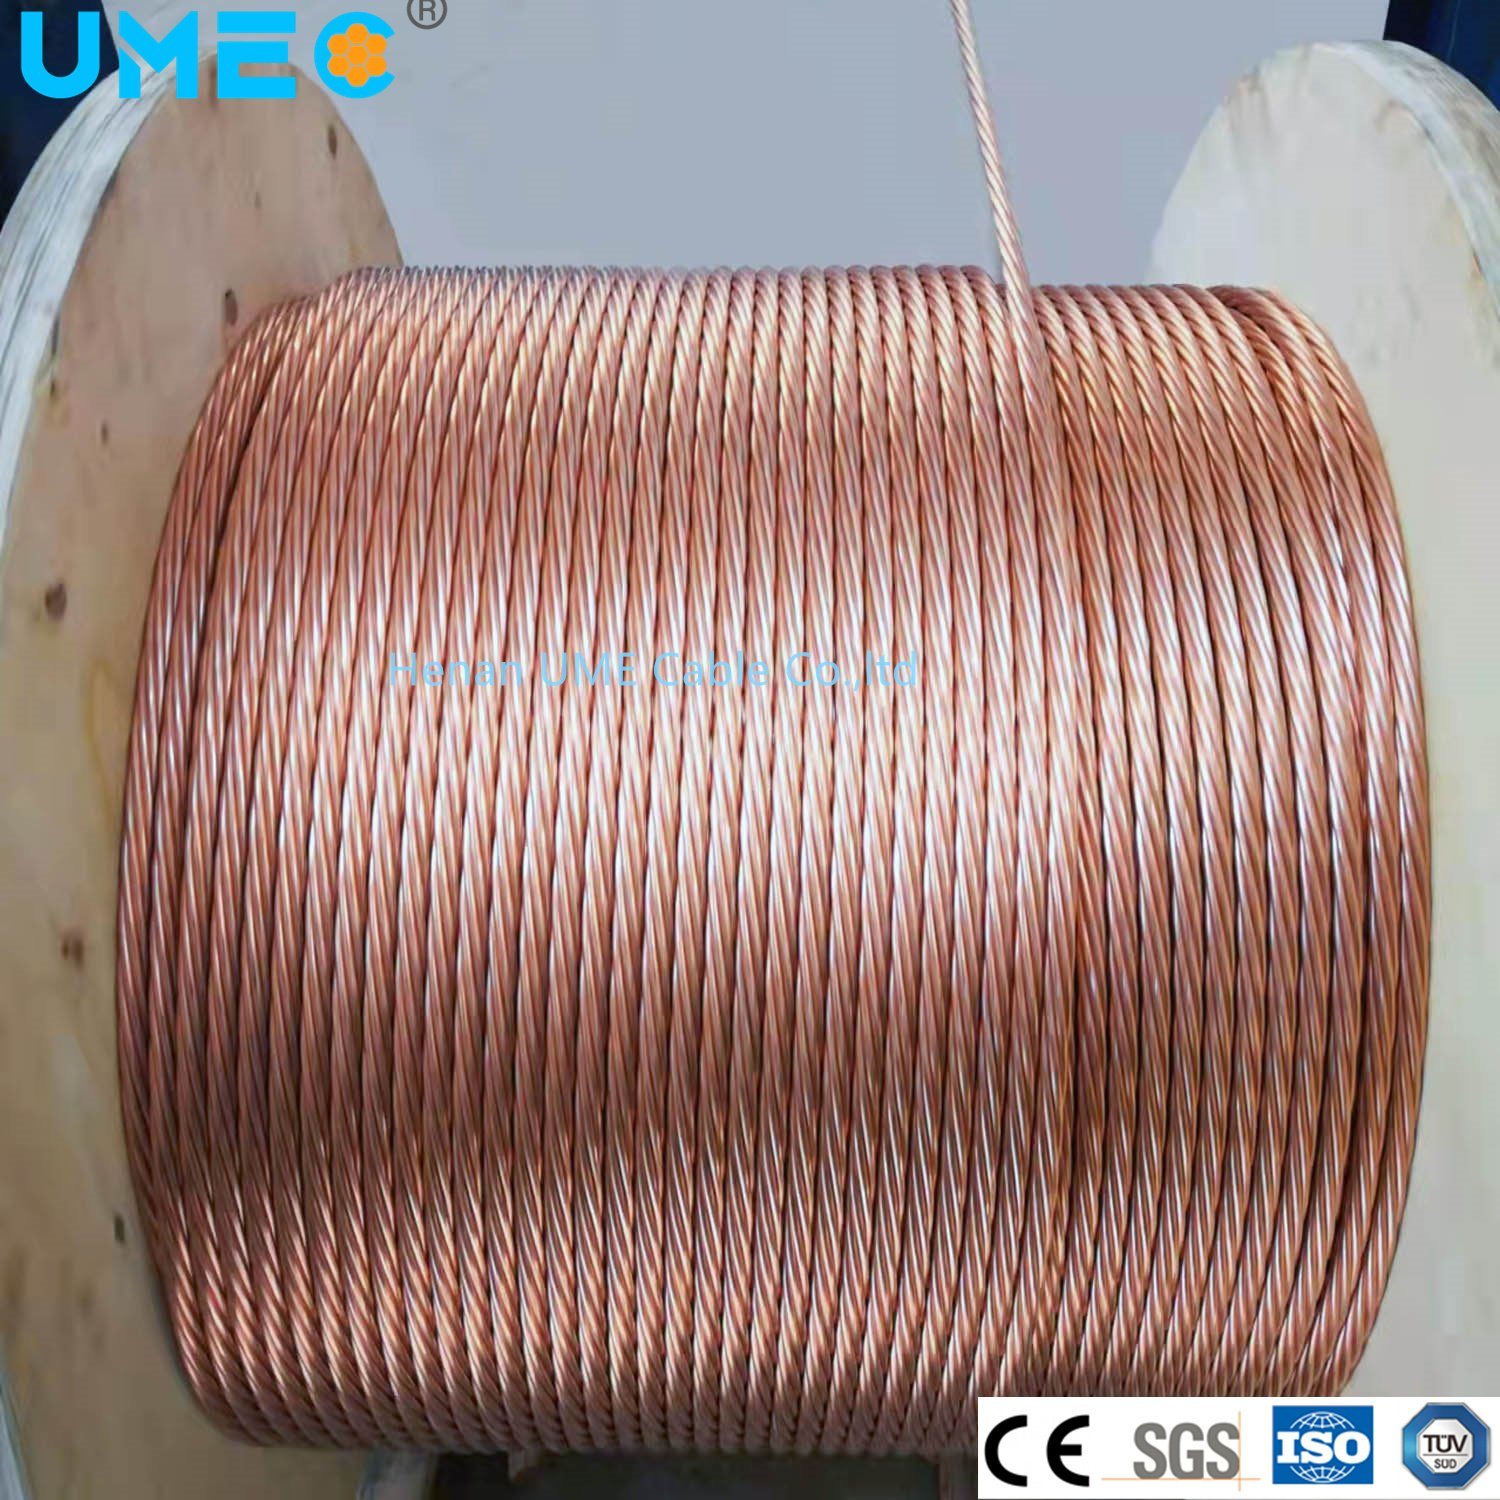 
                O fio de aço Copper-Clad 30% de cobre de condutividade de SOLDAR FIO DO CABO ELÉCTRICO CONDUTOR CCS CCS
            